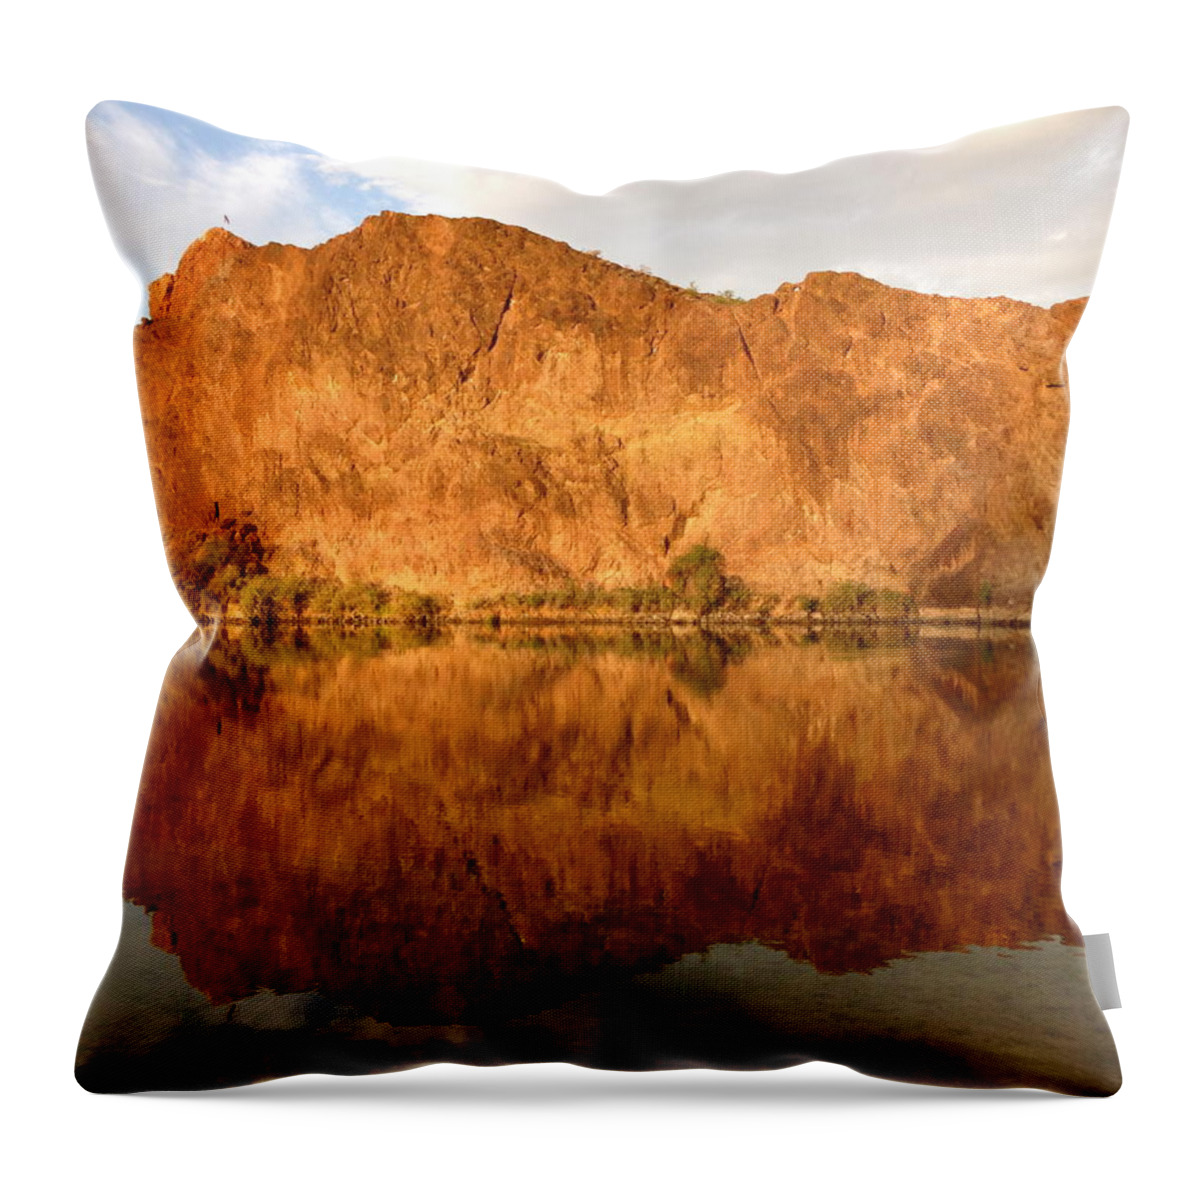 Colorado River Throw Pillow featuring the photograph Reflections on the Colorado by Sam Spreadbury